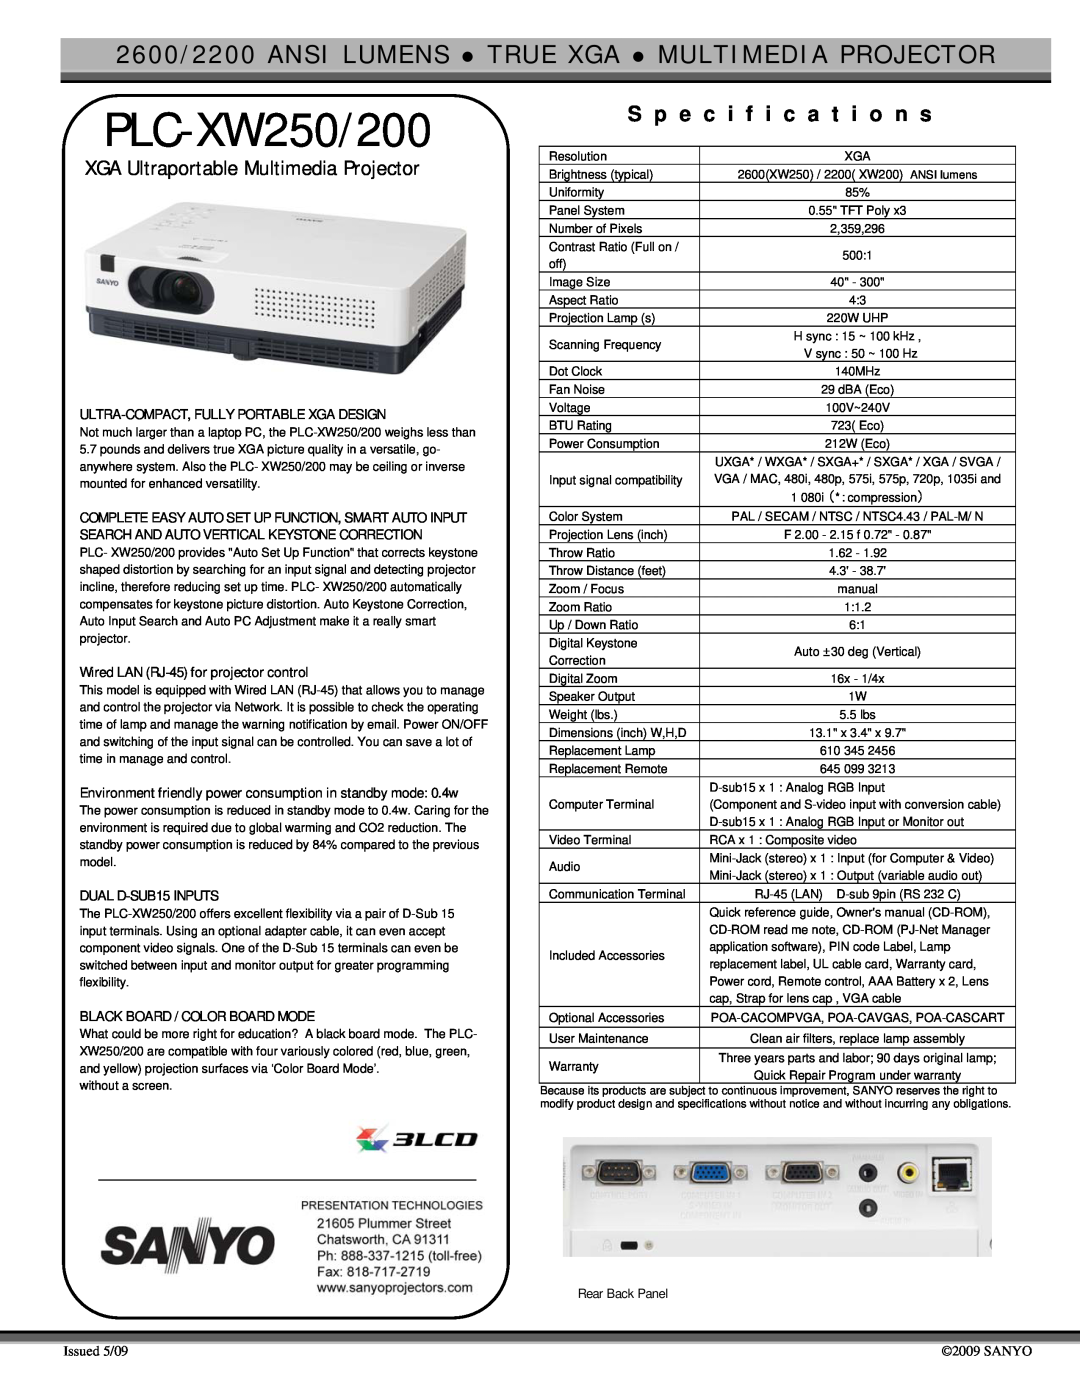 Sanyo specifications PLC-XW250/200, S p e c i f i c a t i o n s, XGA Ultraportable Multimedia Projector 